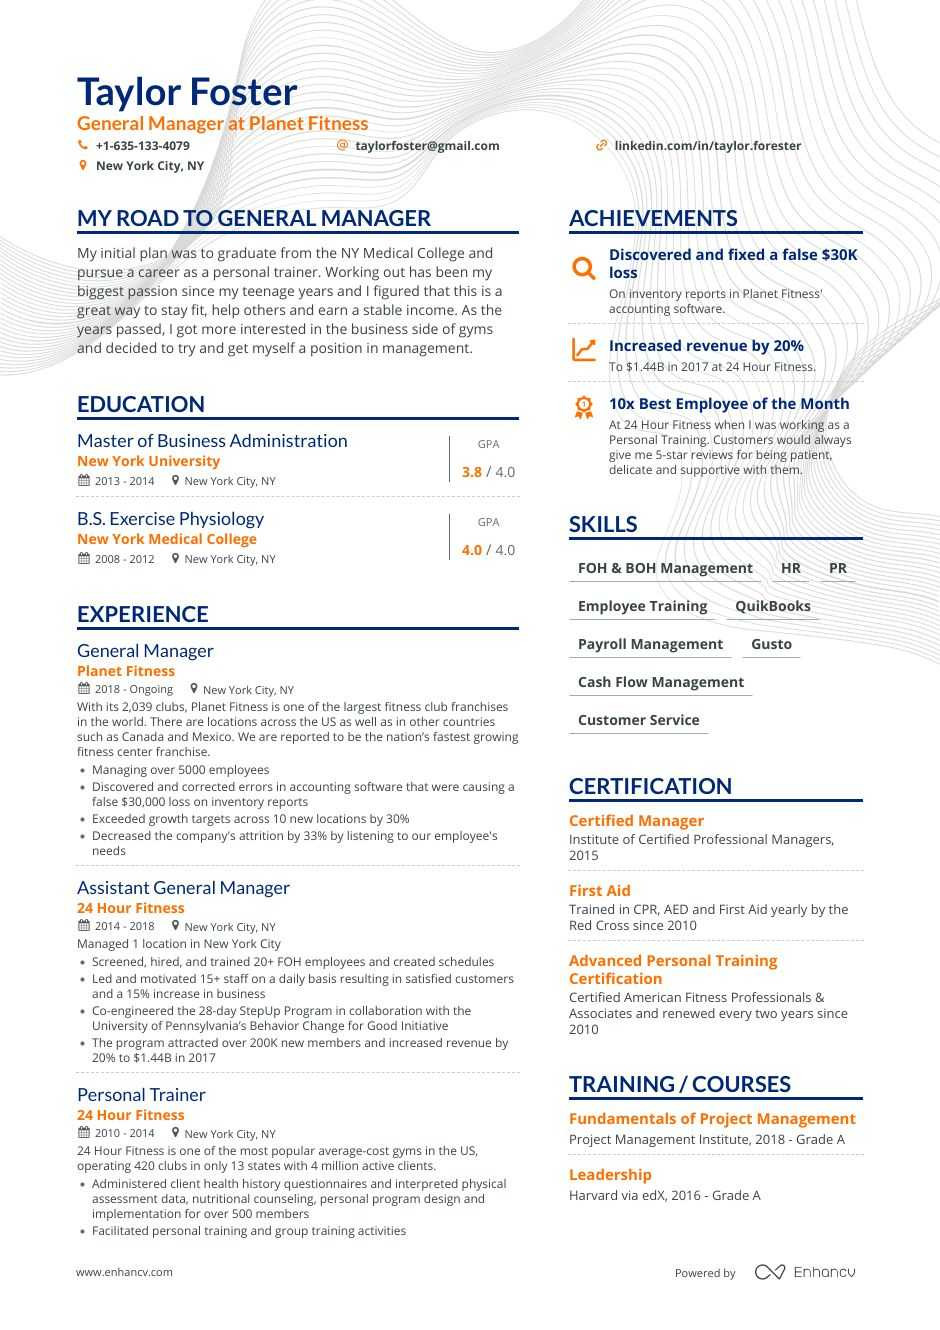 Sample Resume for General Manager Position General Manager Resume Examples: 4 Templates & How-to Guide